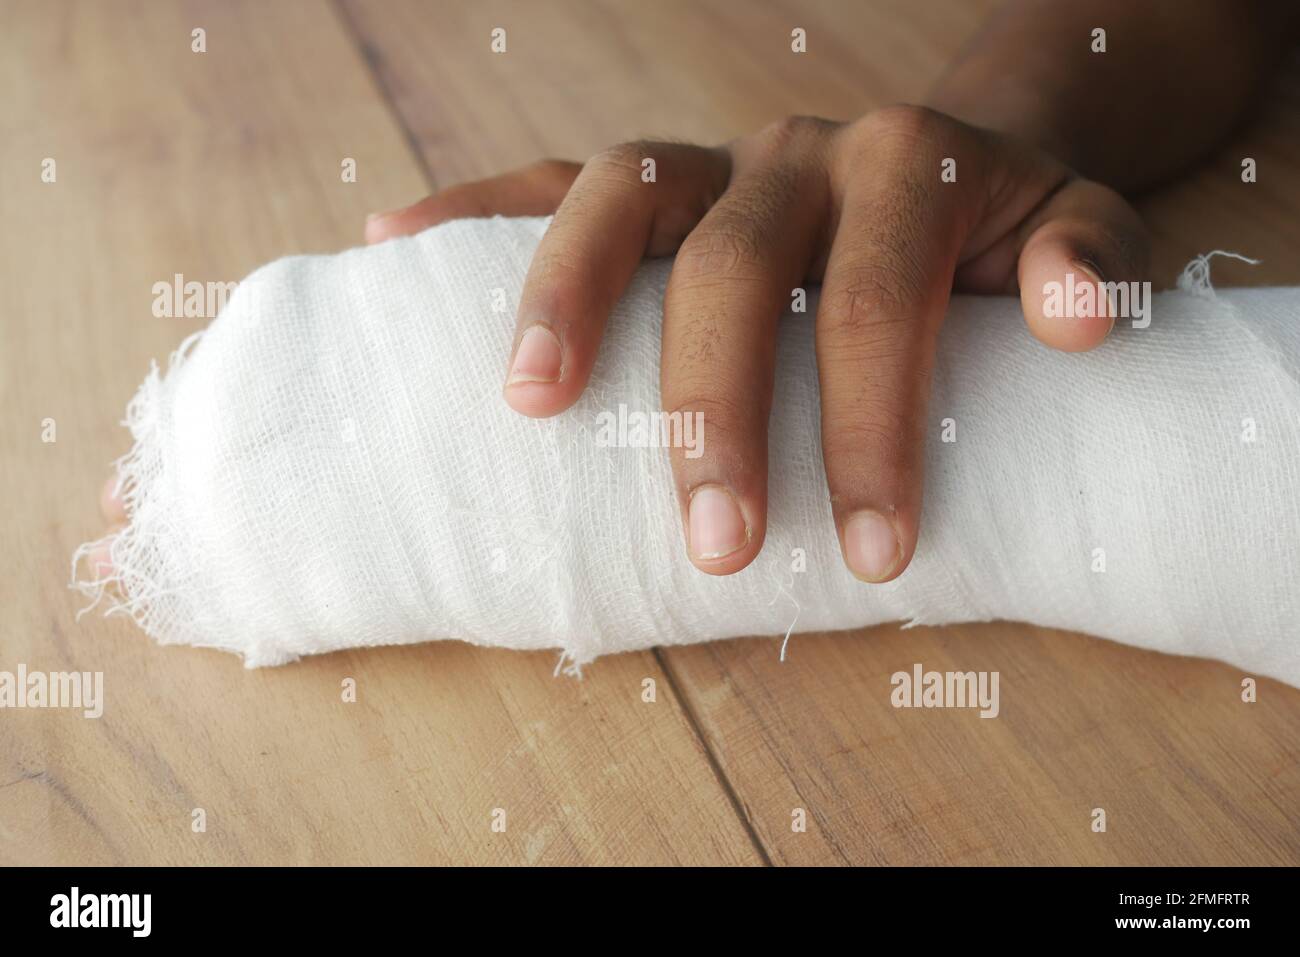 injured painful hand with bandage  Stock Photo